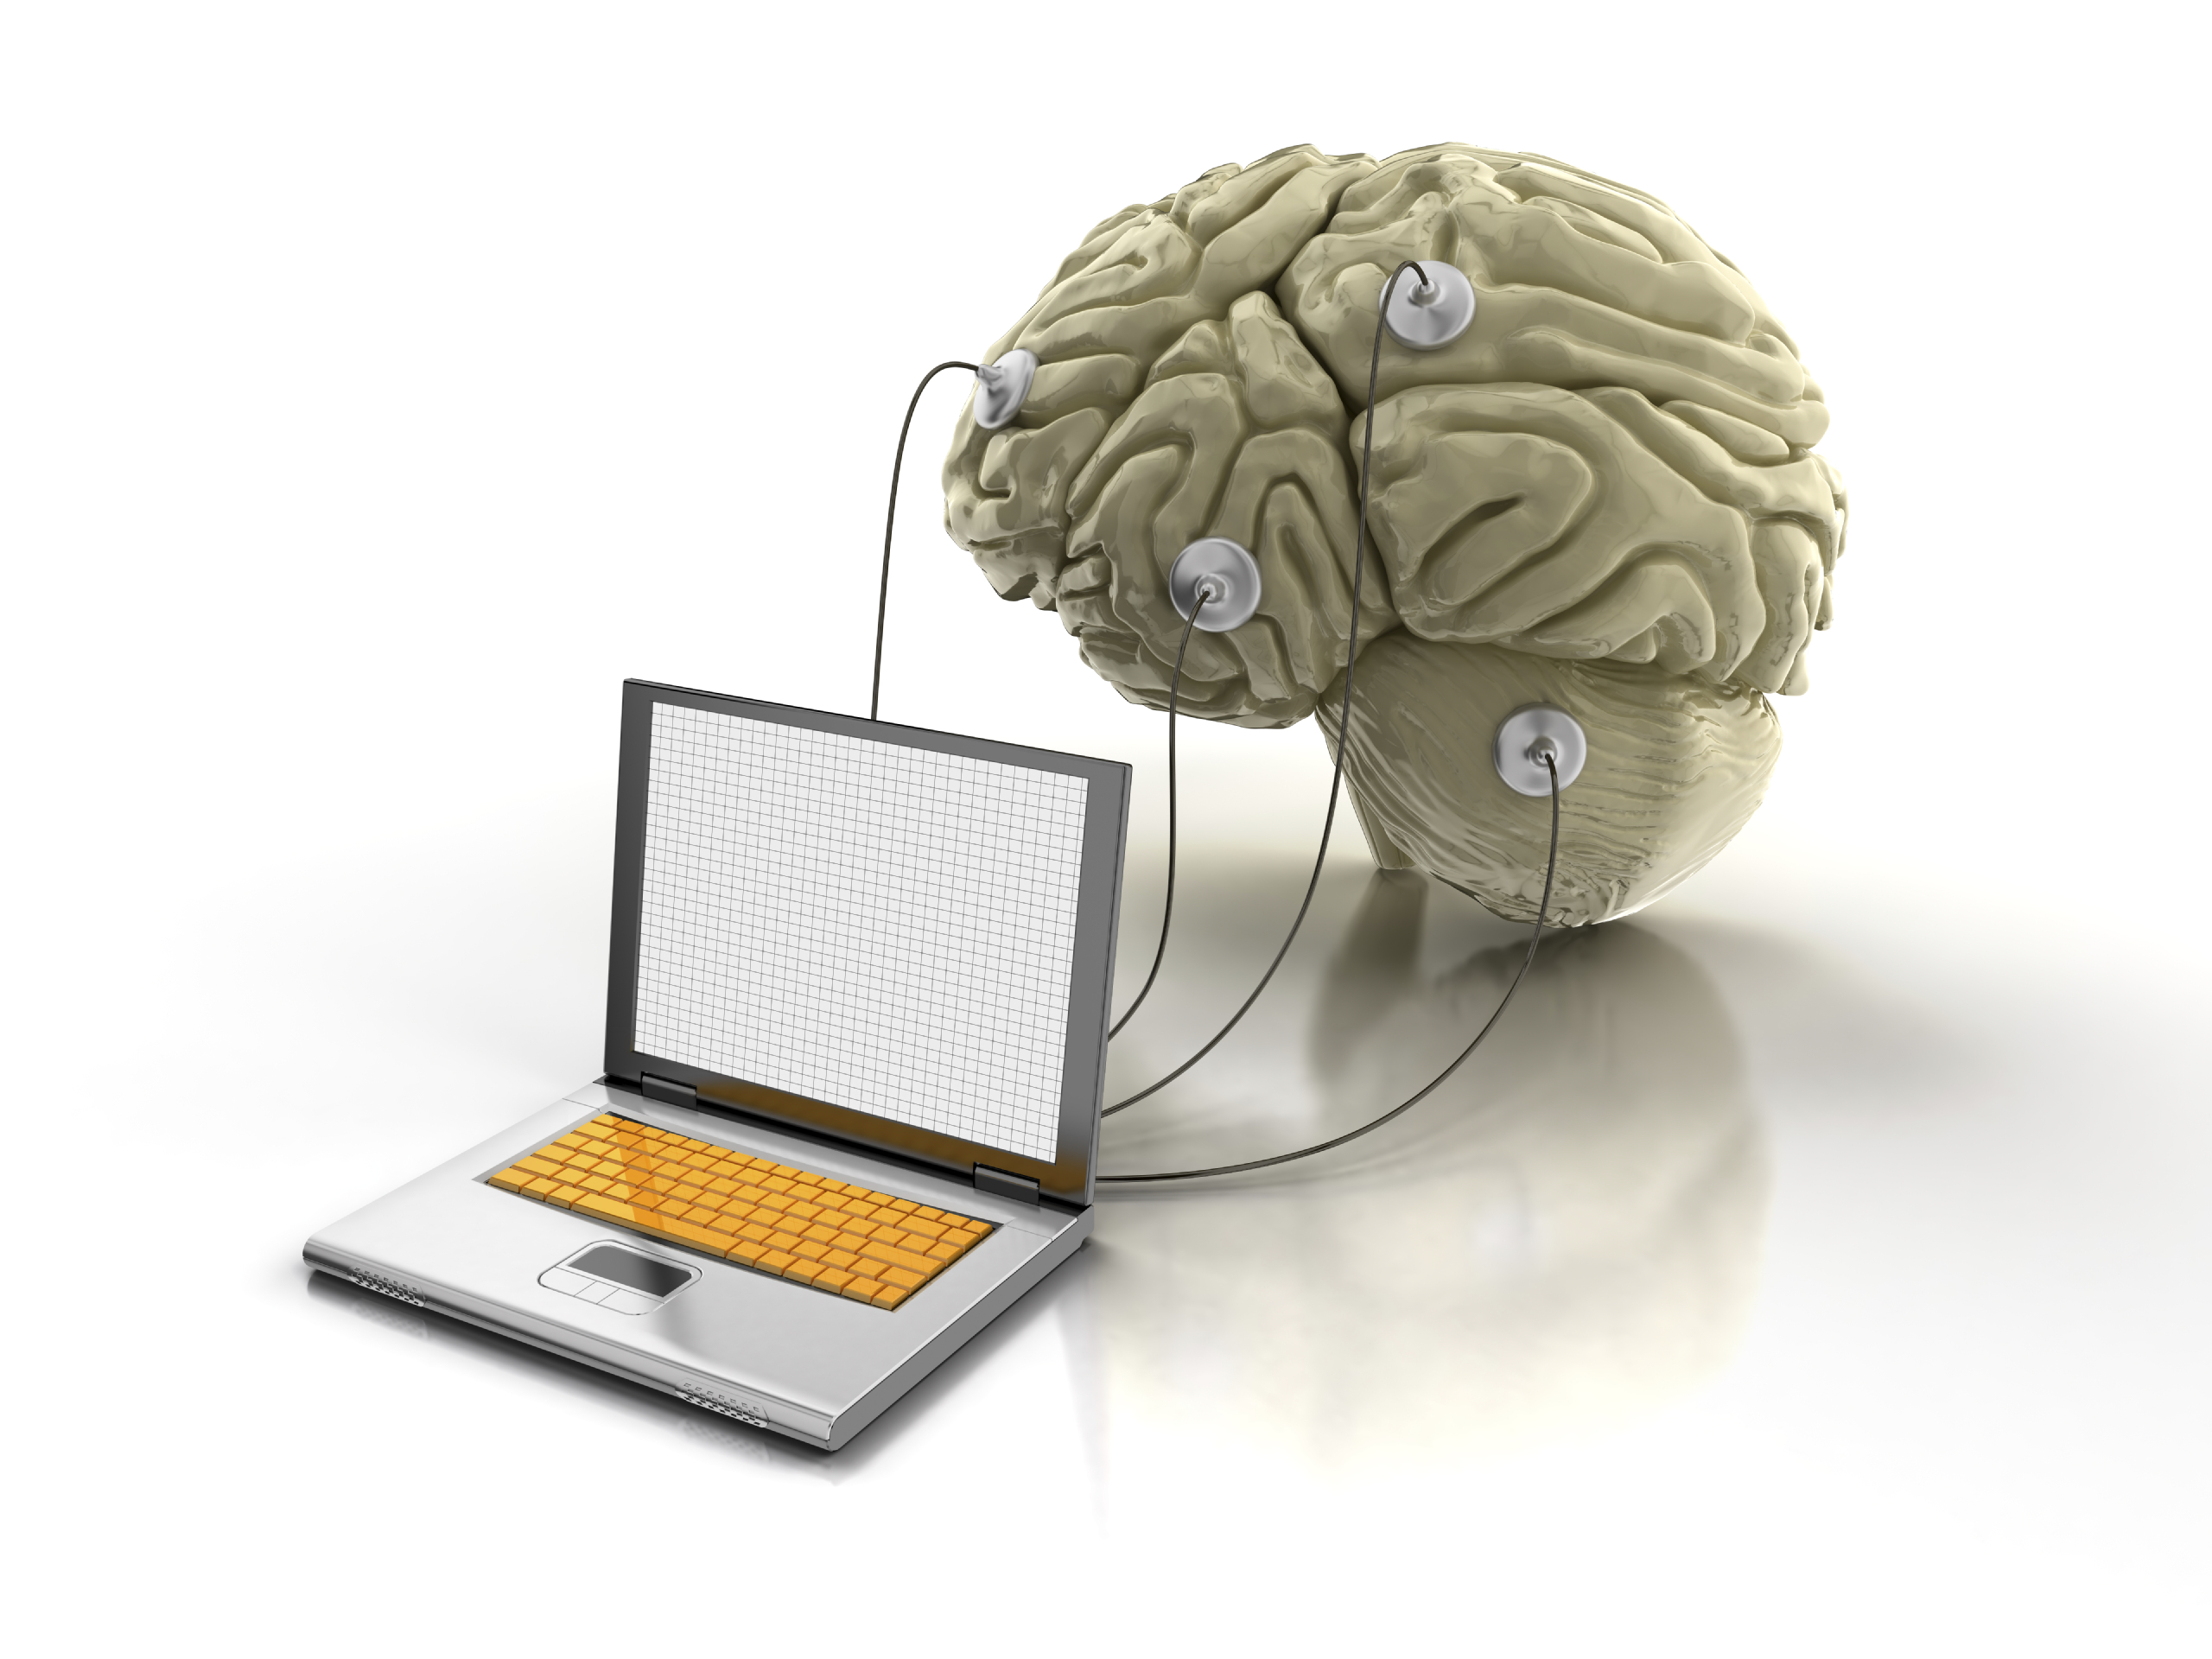 Мозг компьютера. Программирование мозга. Мозг человека компьютер. Память человека и компьютера. Компьютерный мозг игра